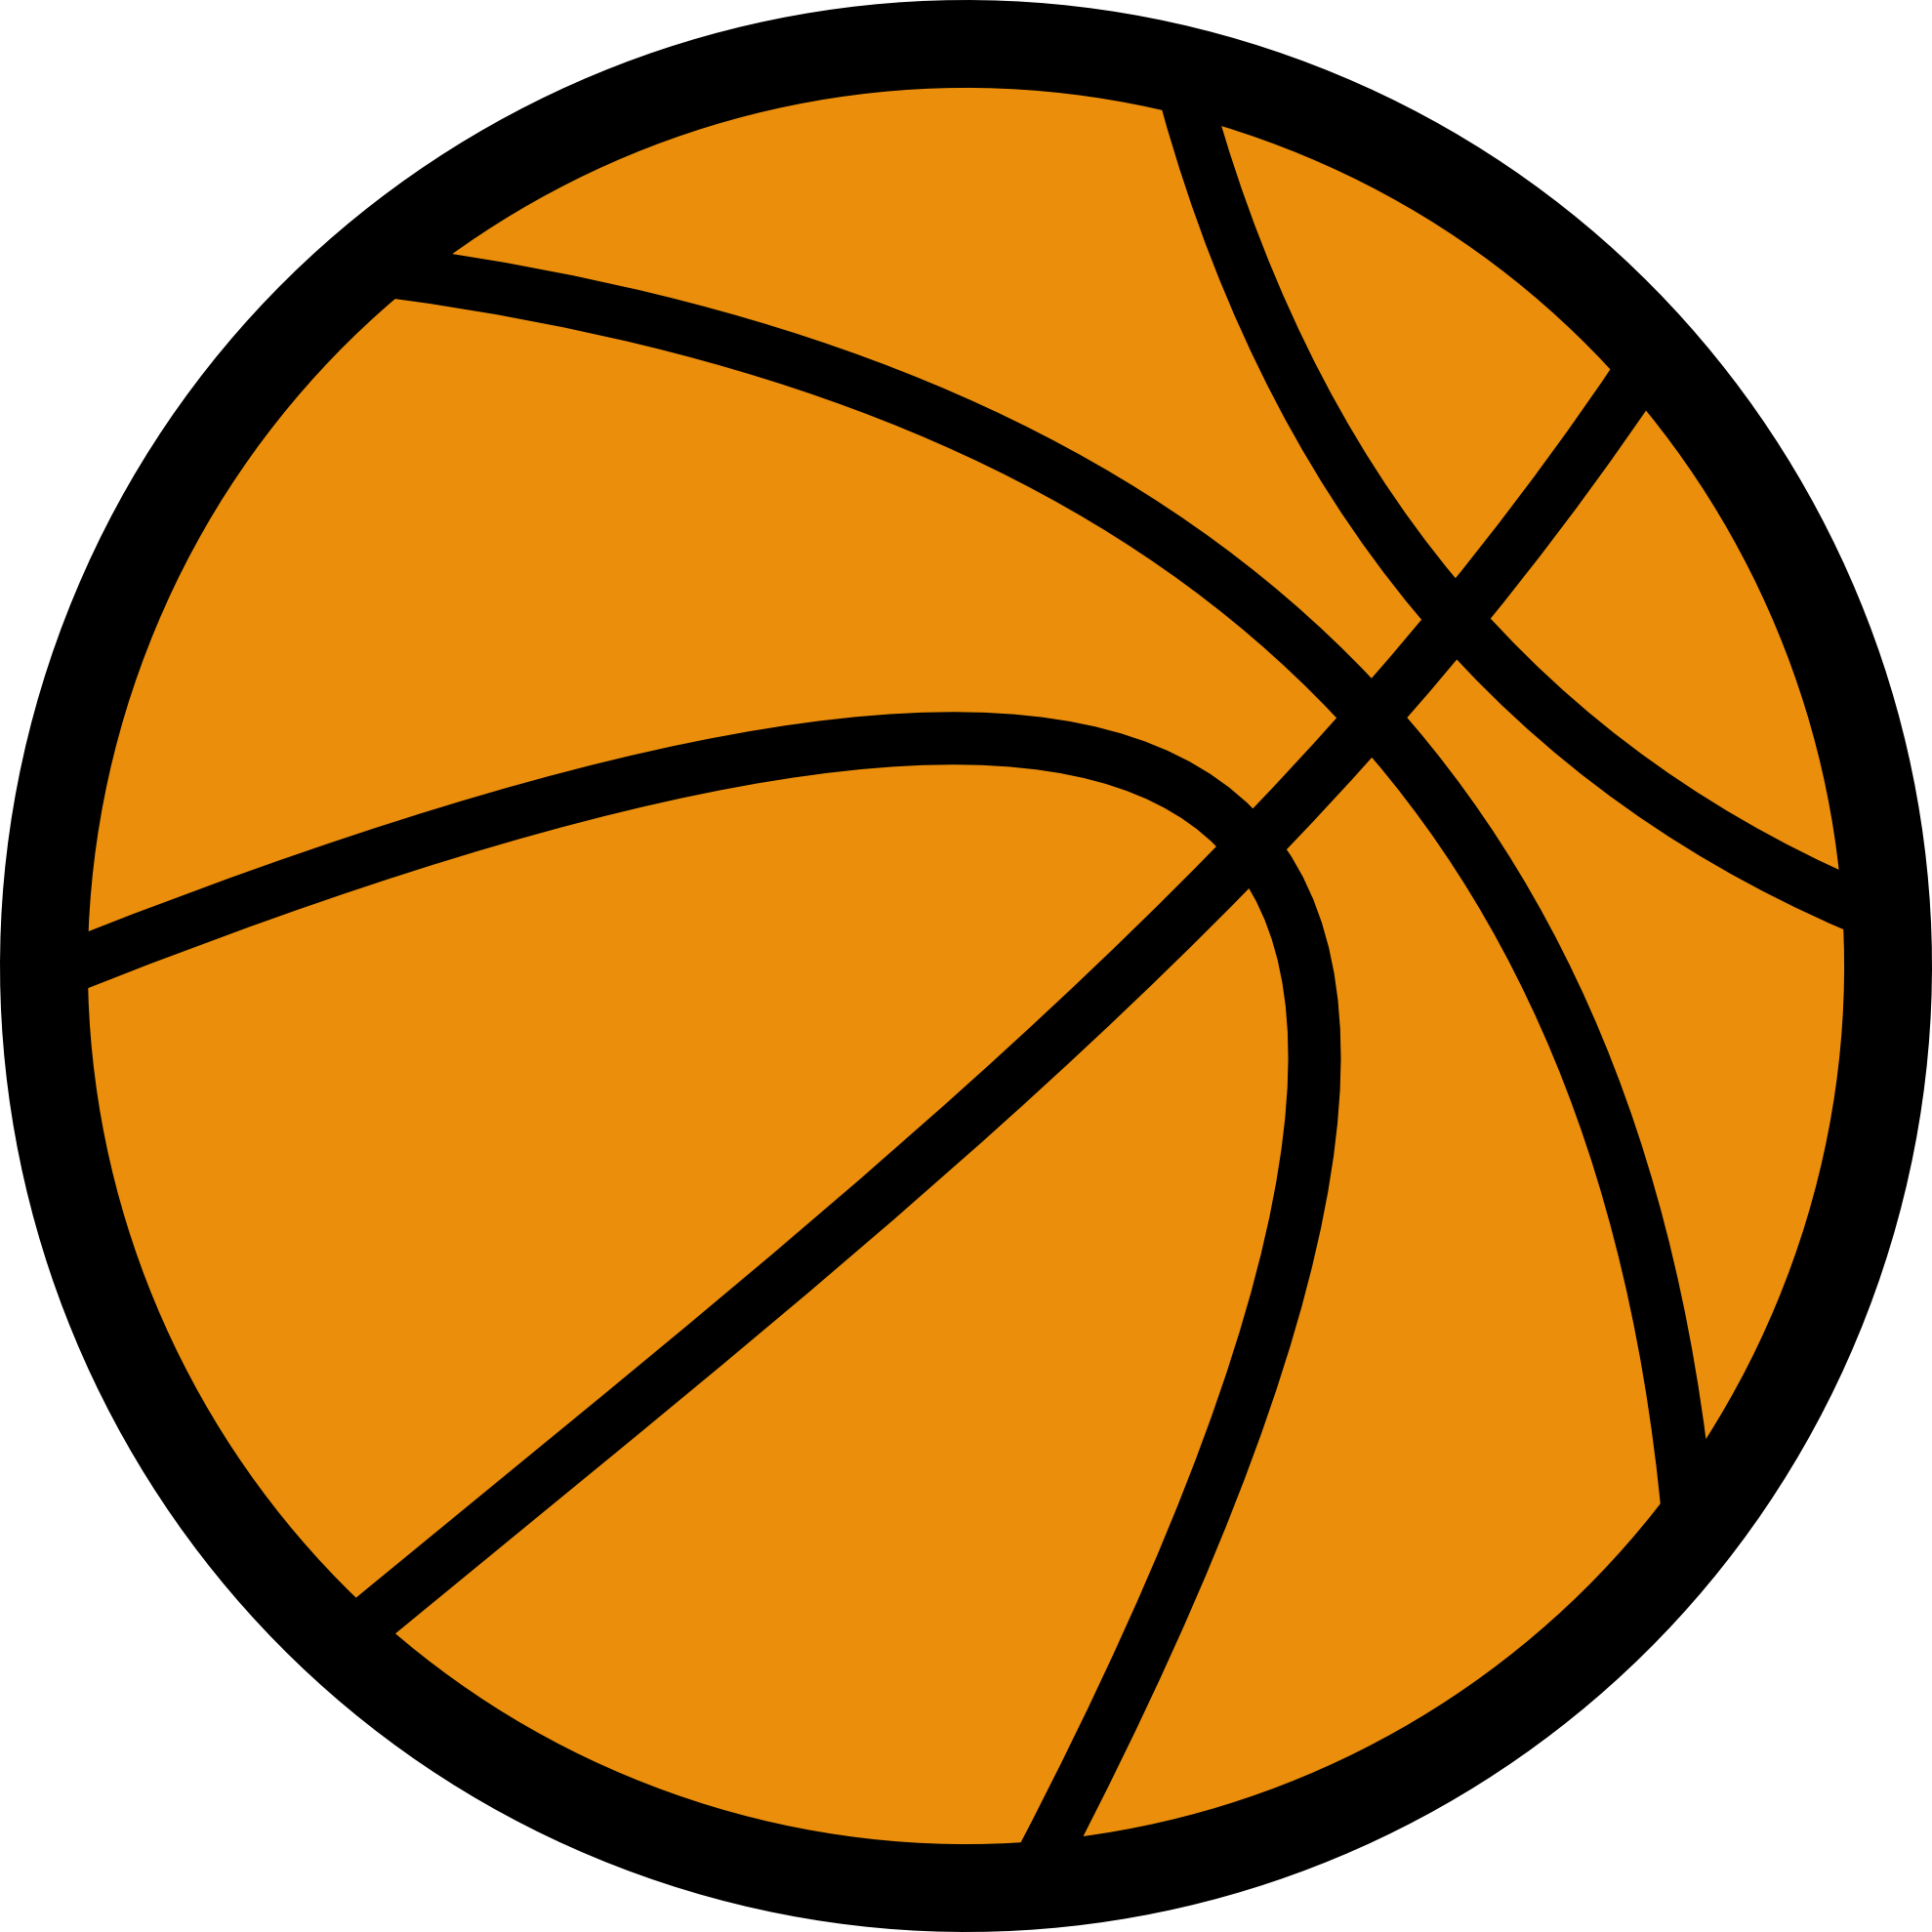 Transparent Basketball Logo - Basketball HD PNG Transparent Basketball HD PNG Image